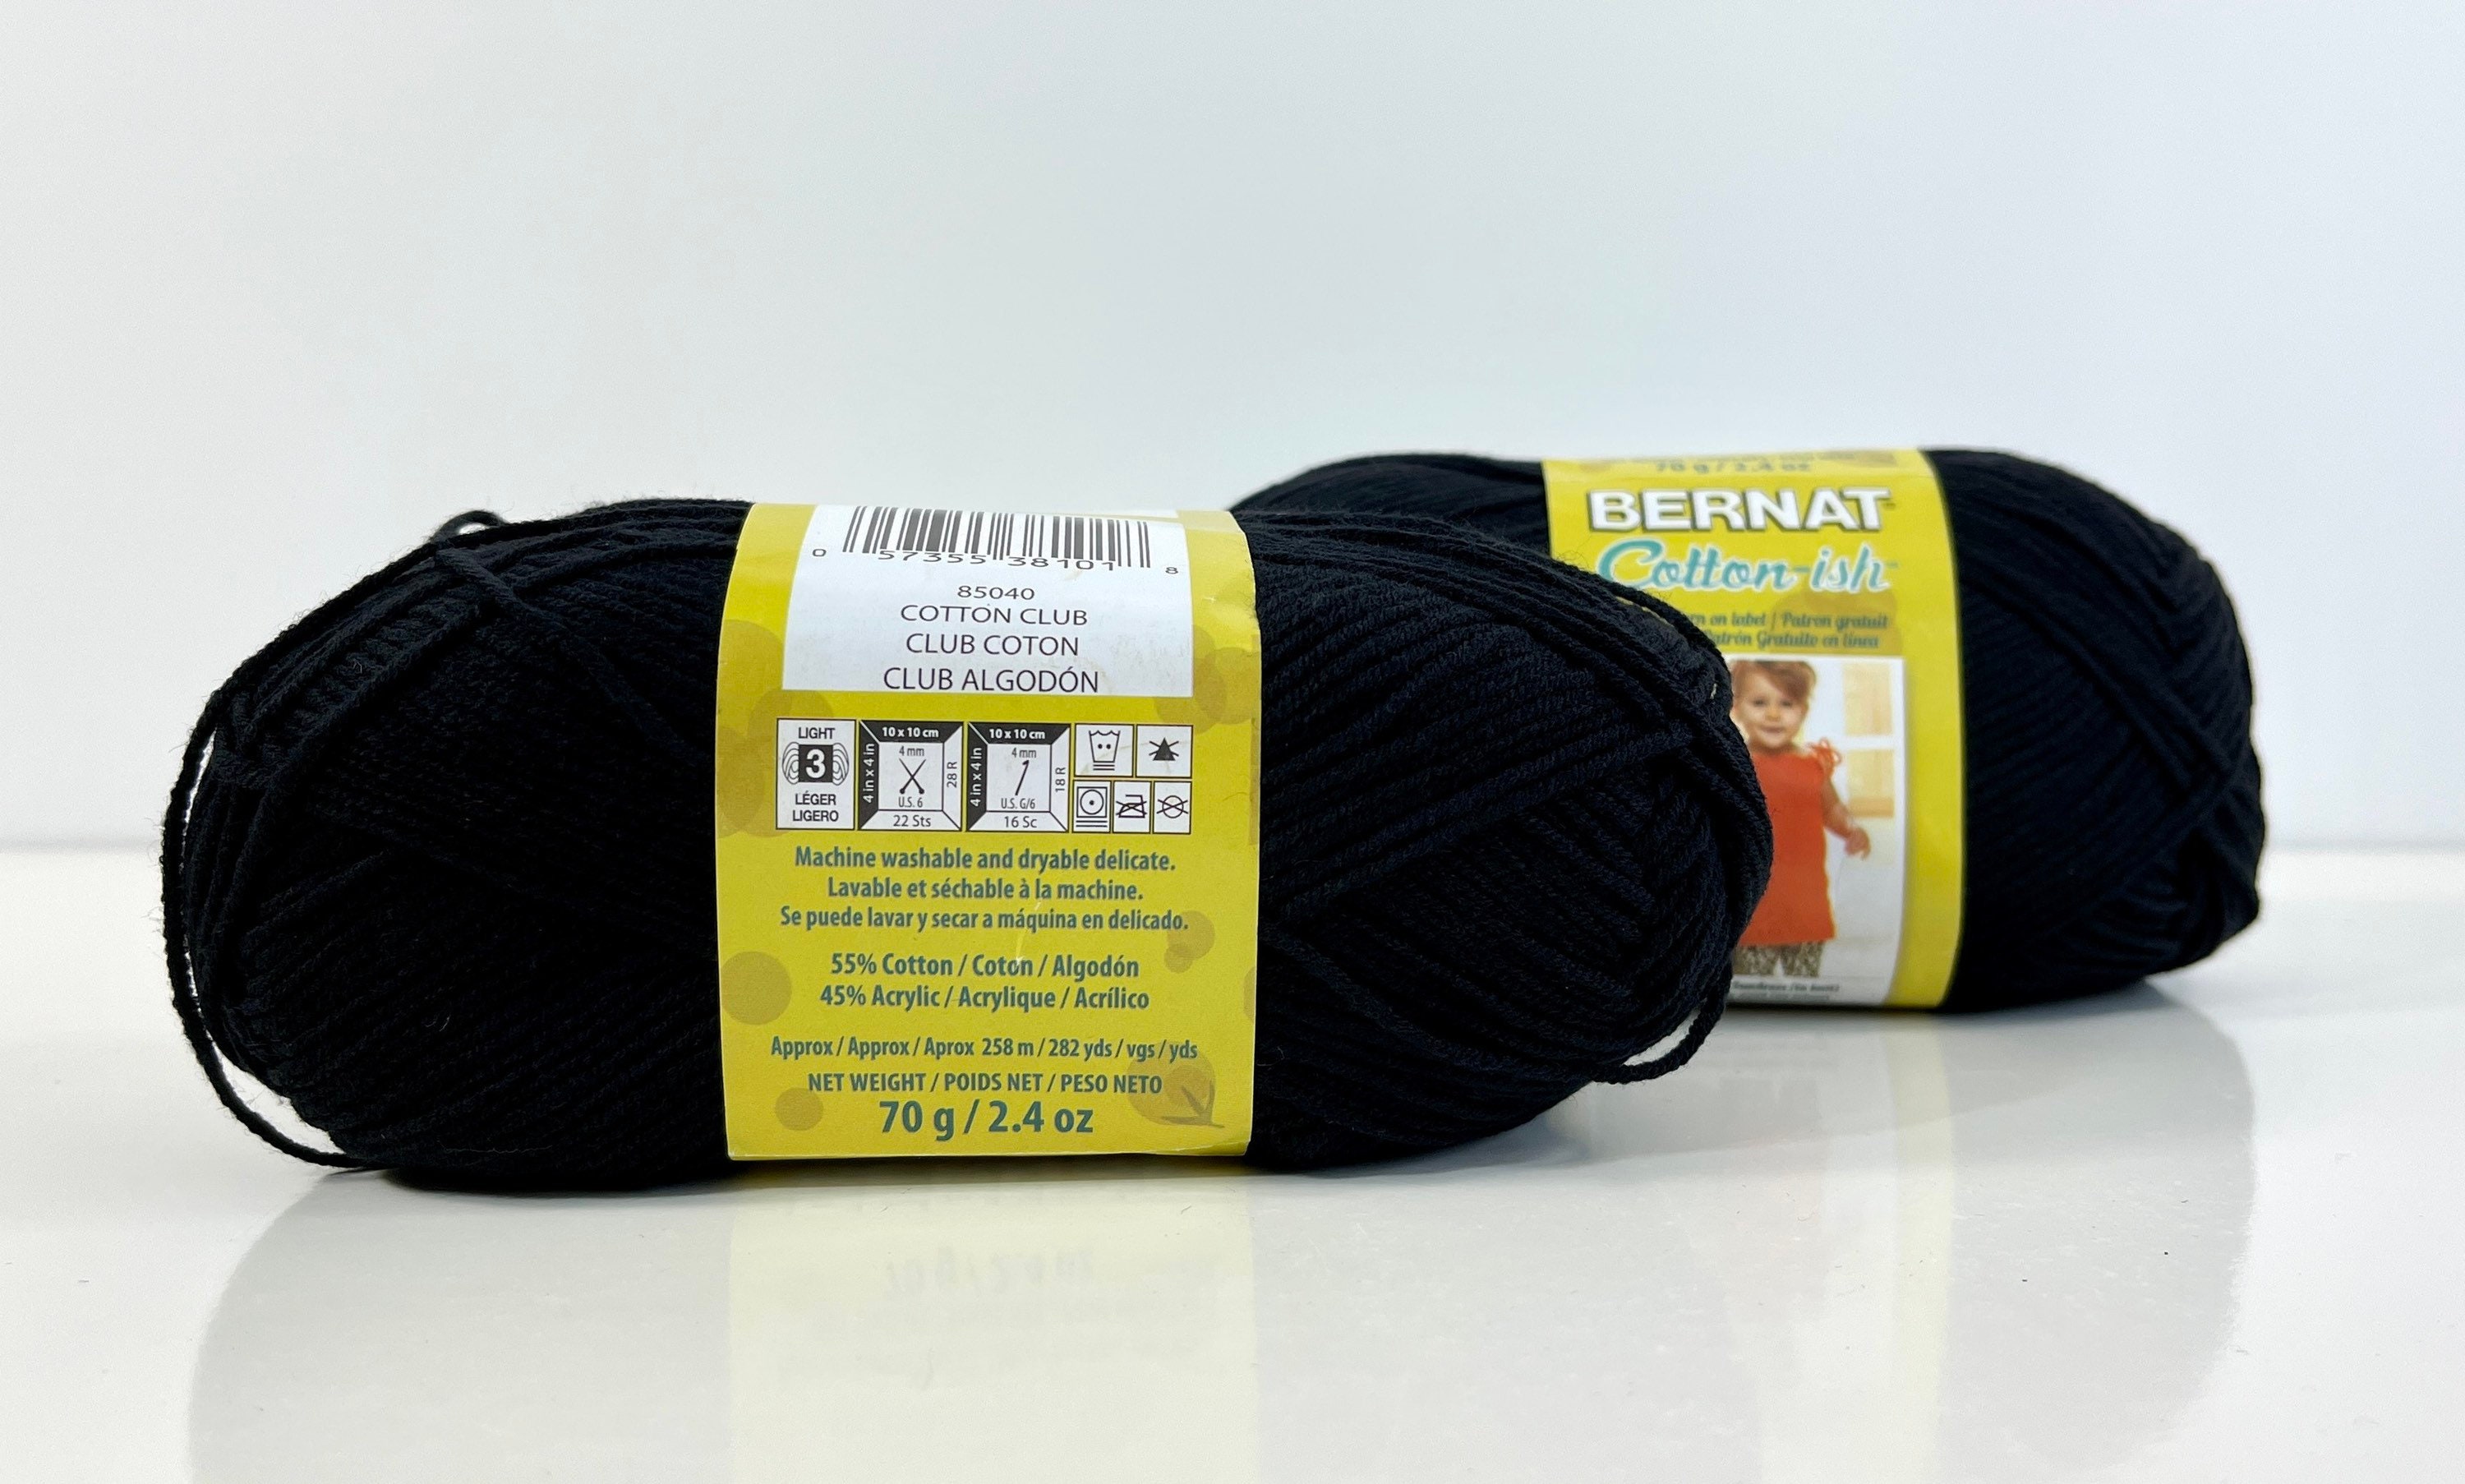 Bernat Softee Cotton Yarn-Black